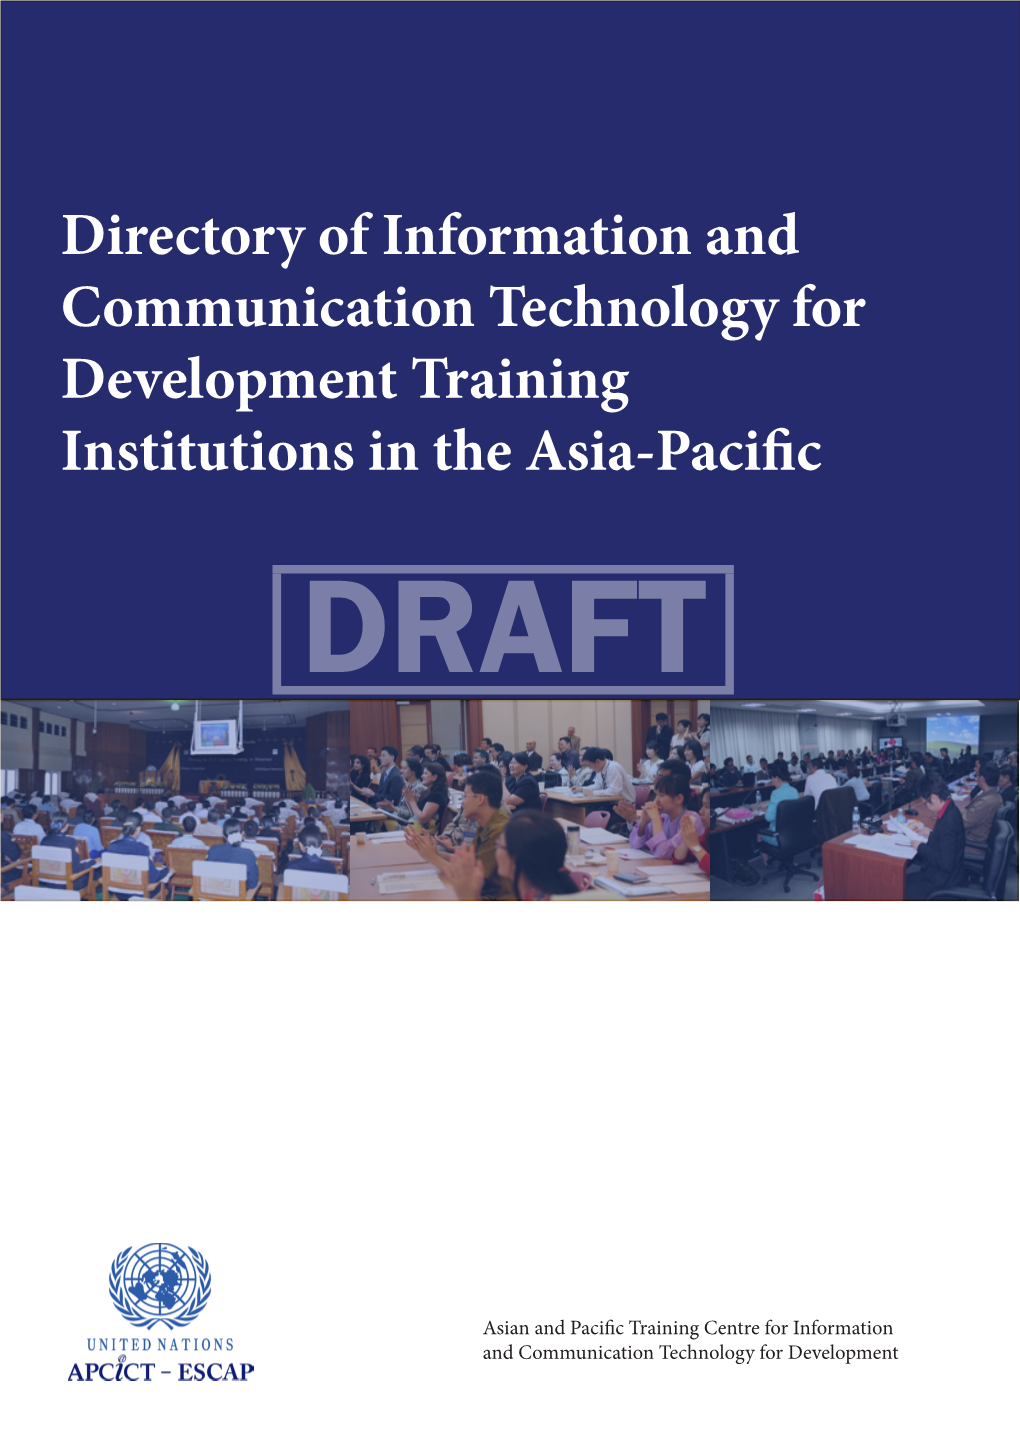 ICTD Directory-Draft.Pdf